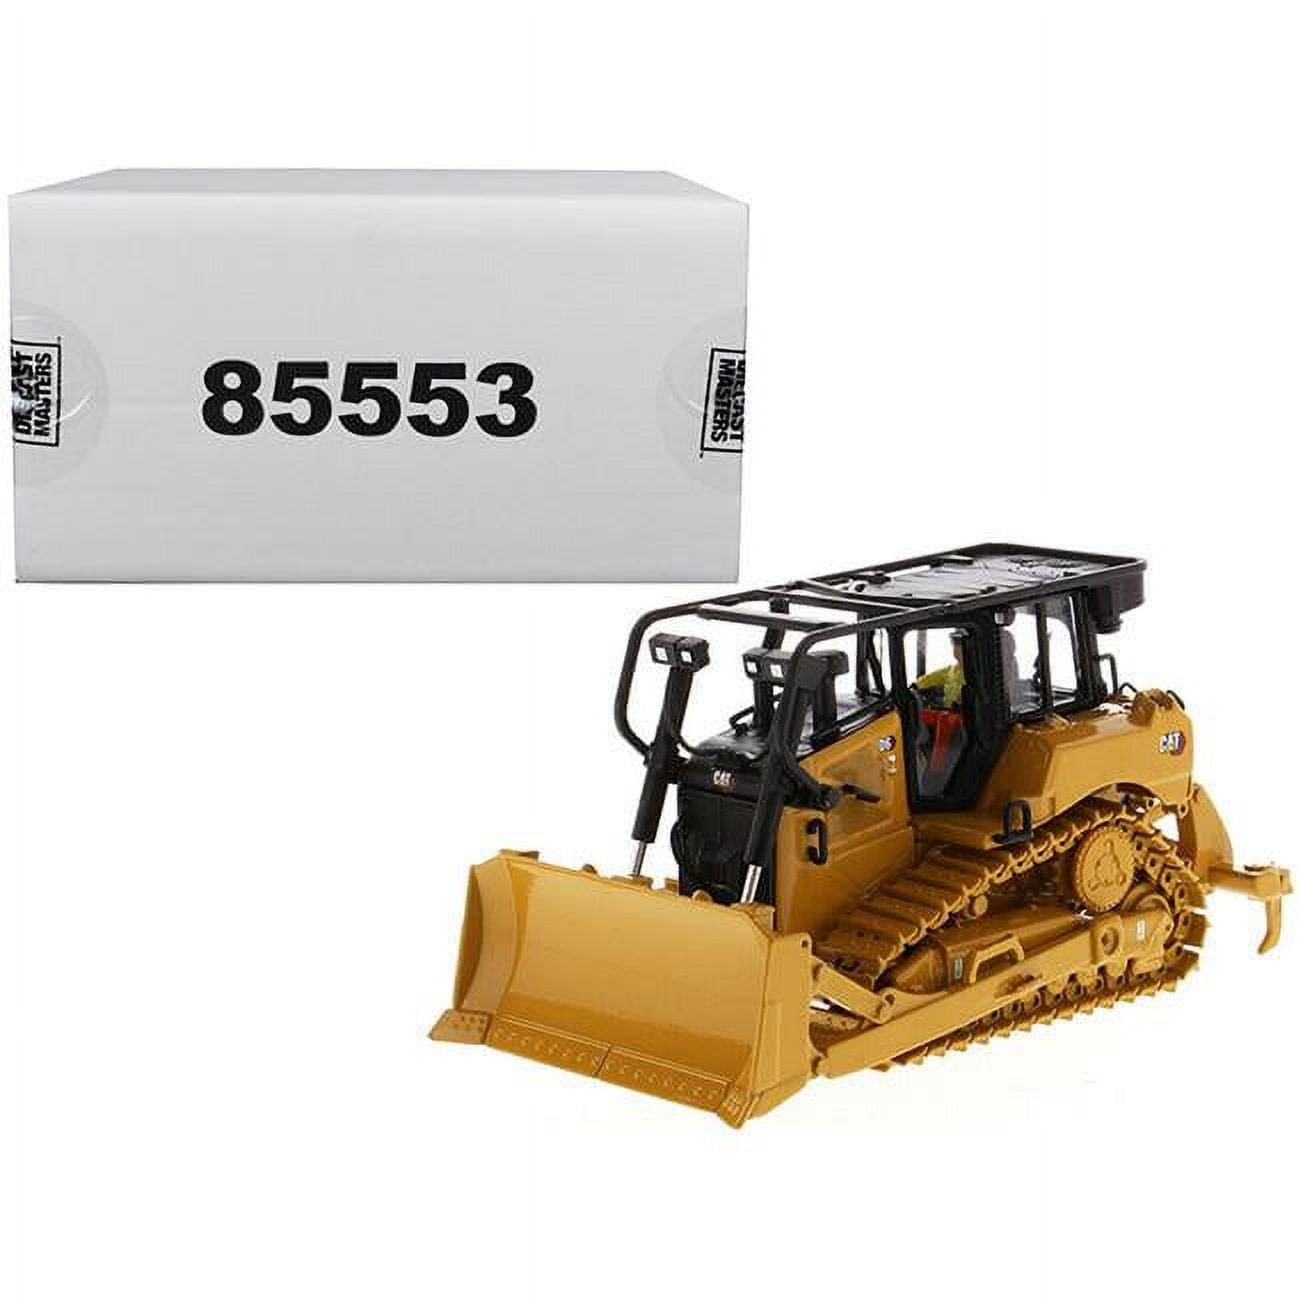 85553 Cat Caterpillar D6 Track Type Tractor Dozer With Su Blade & Operator High Line Series 1-50 Diecast Model